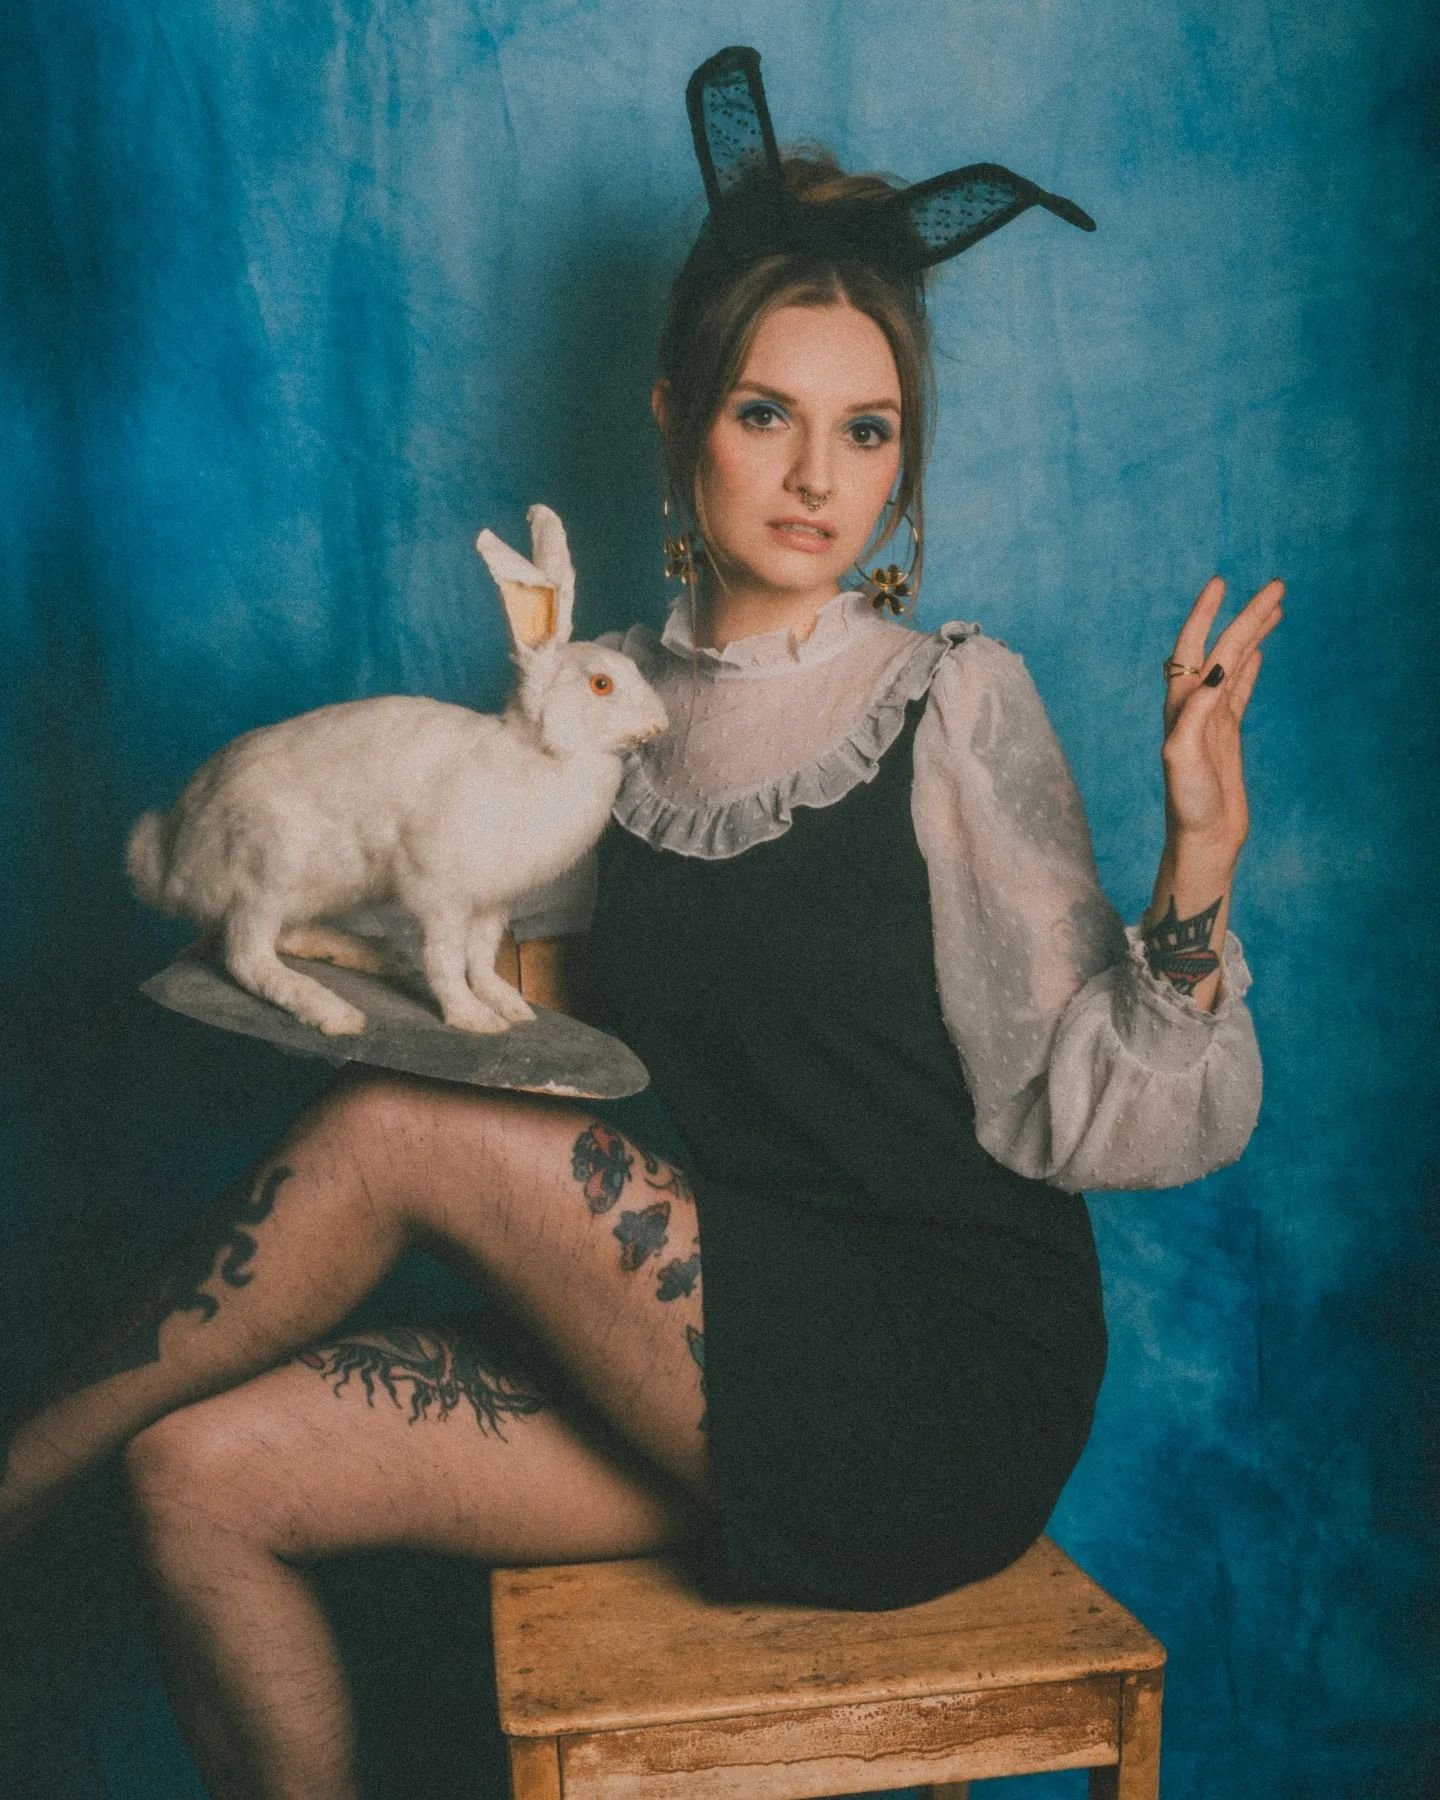 The girl &amp; Bernard the bunny 🐰

Model &amp; MUAH: @jennamoi 
Earrings: @minegungorart 
Photo &amp; edit: @nellyjuliadesign 

#60s #60sinspired #modestyle #photoshoot #models #modeling #altmodels #alternativefashion #tattooed #inkedmodels #twiggy